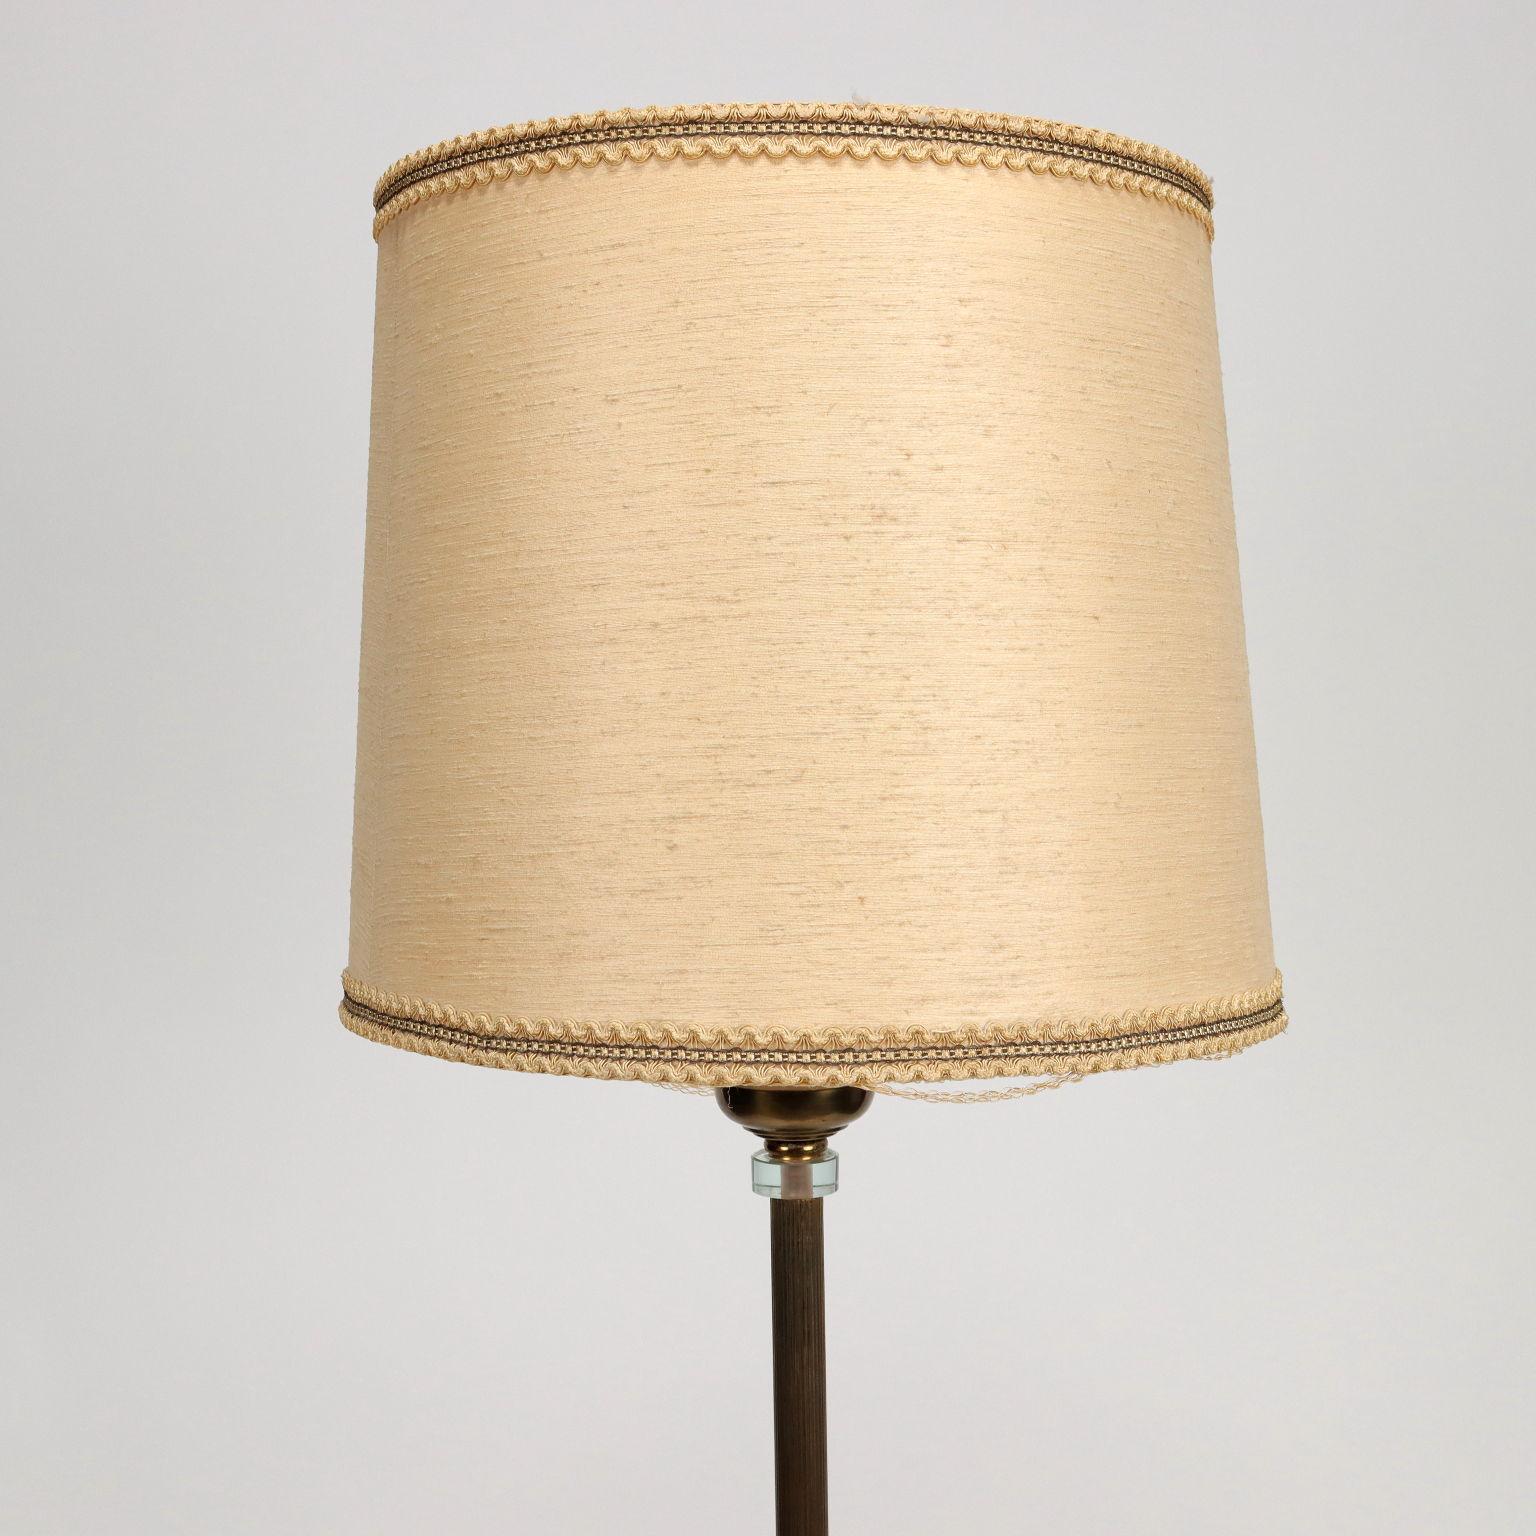 Mid-Century Modern Floor lamp 40s-50s Years For Sale